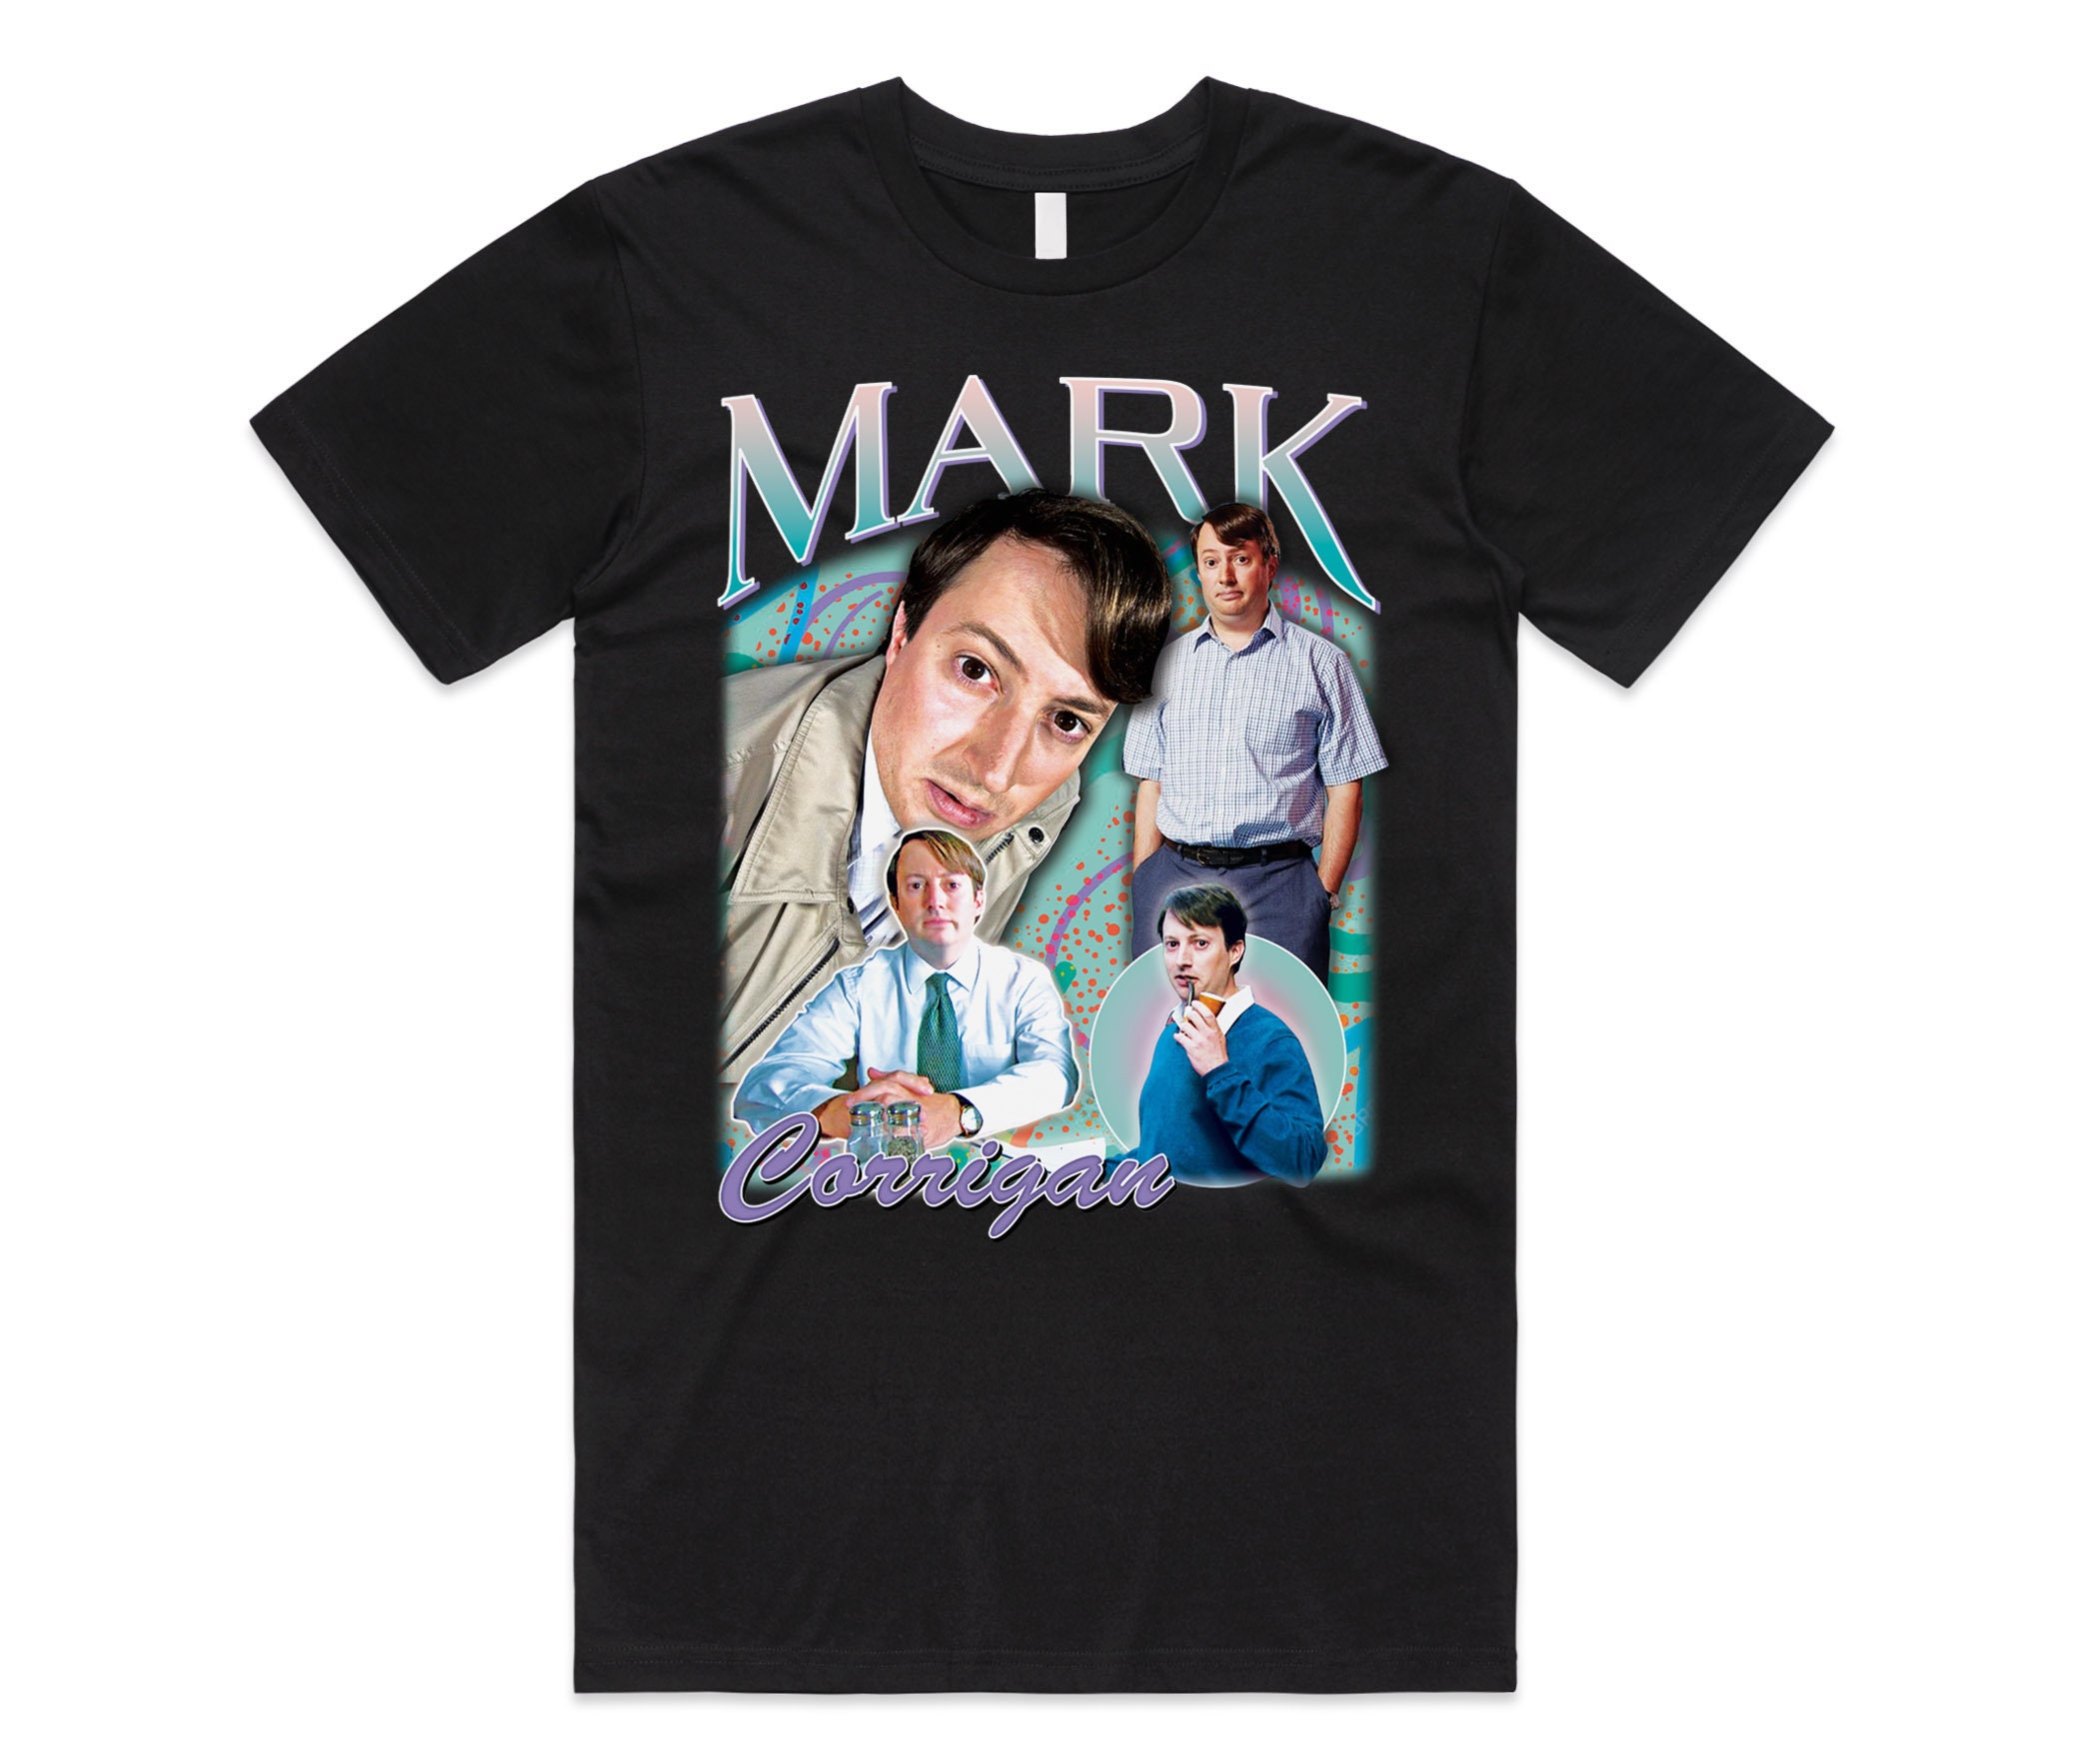 Mark Corrigan Homage T-Shirt Tee Top Funny British Tv Show Gift Super Hand Mens Womens